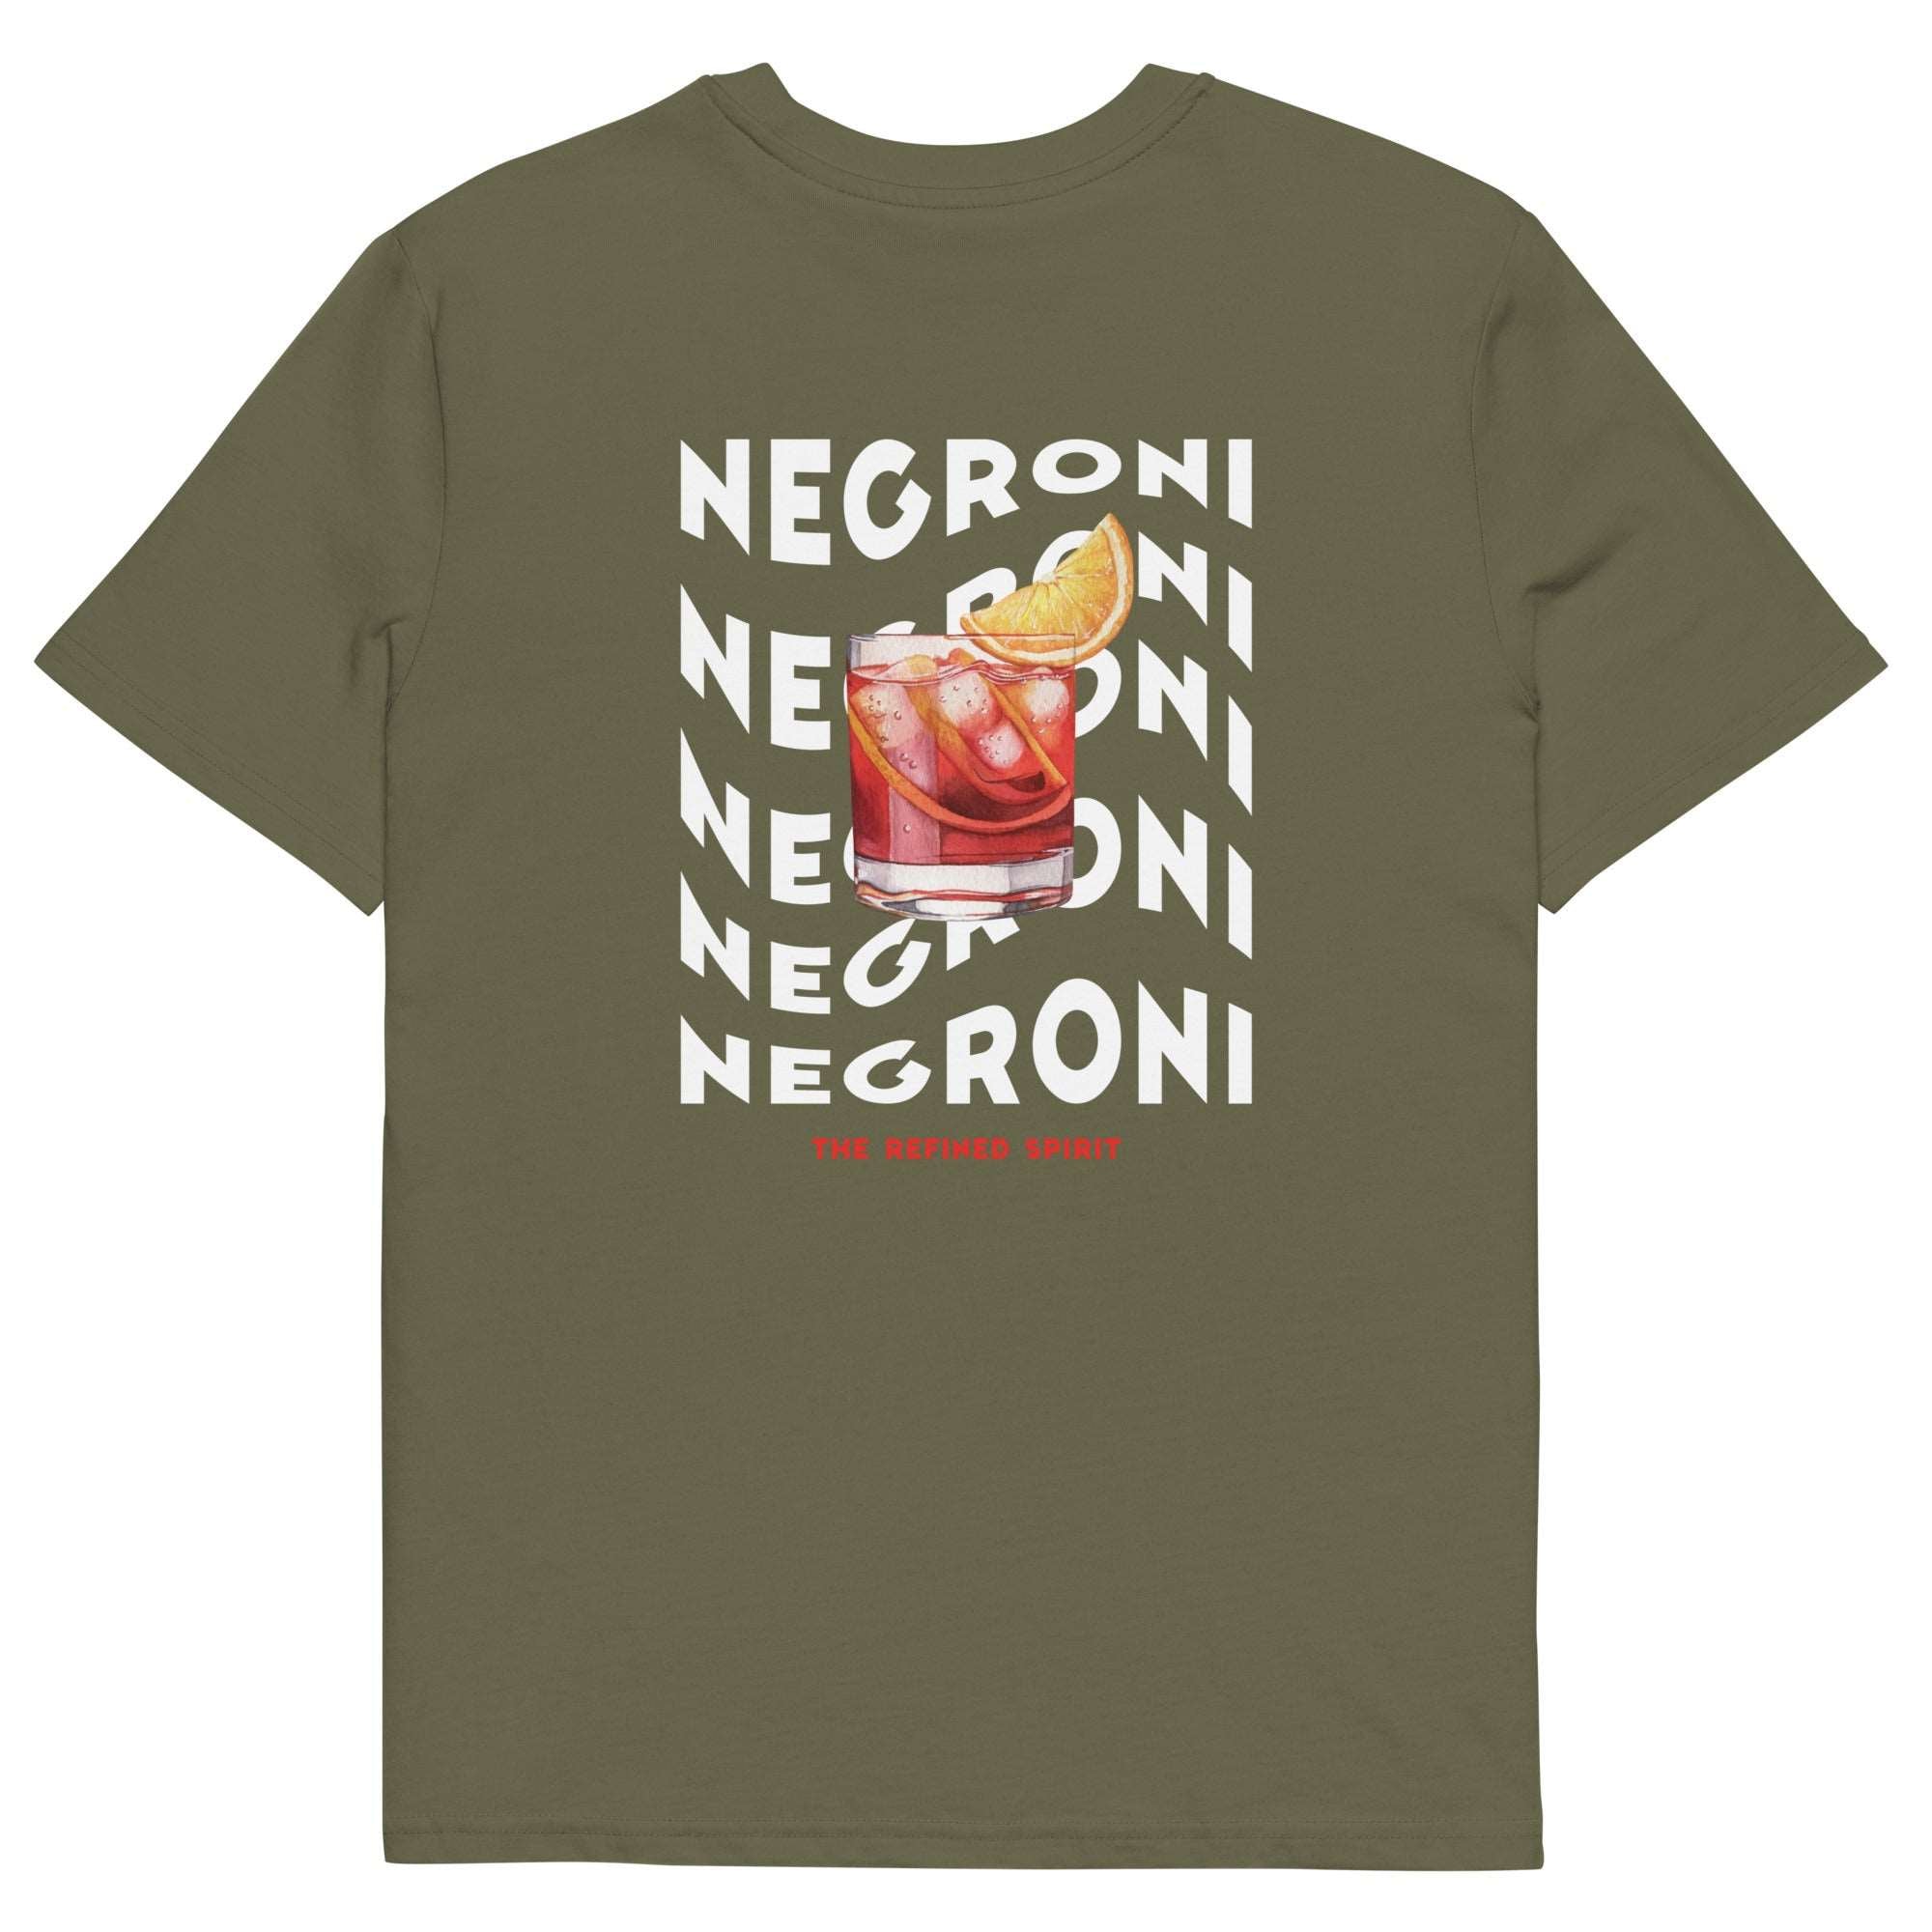 Waving Negroni - Organic T-shirt